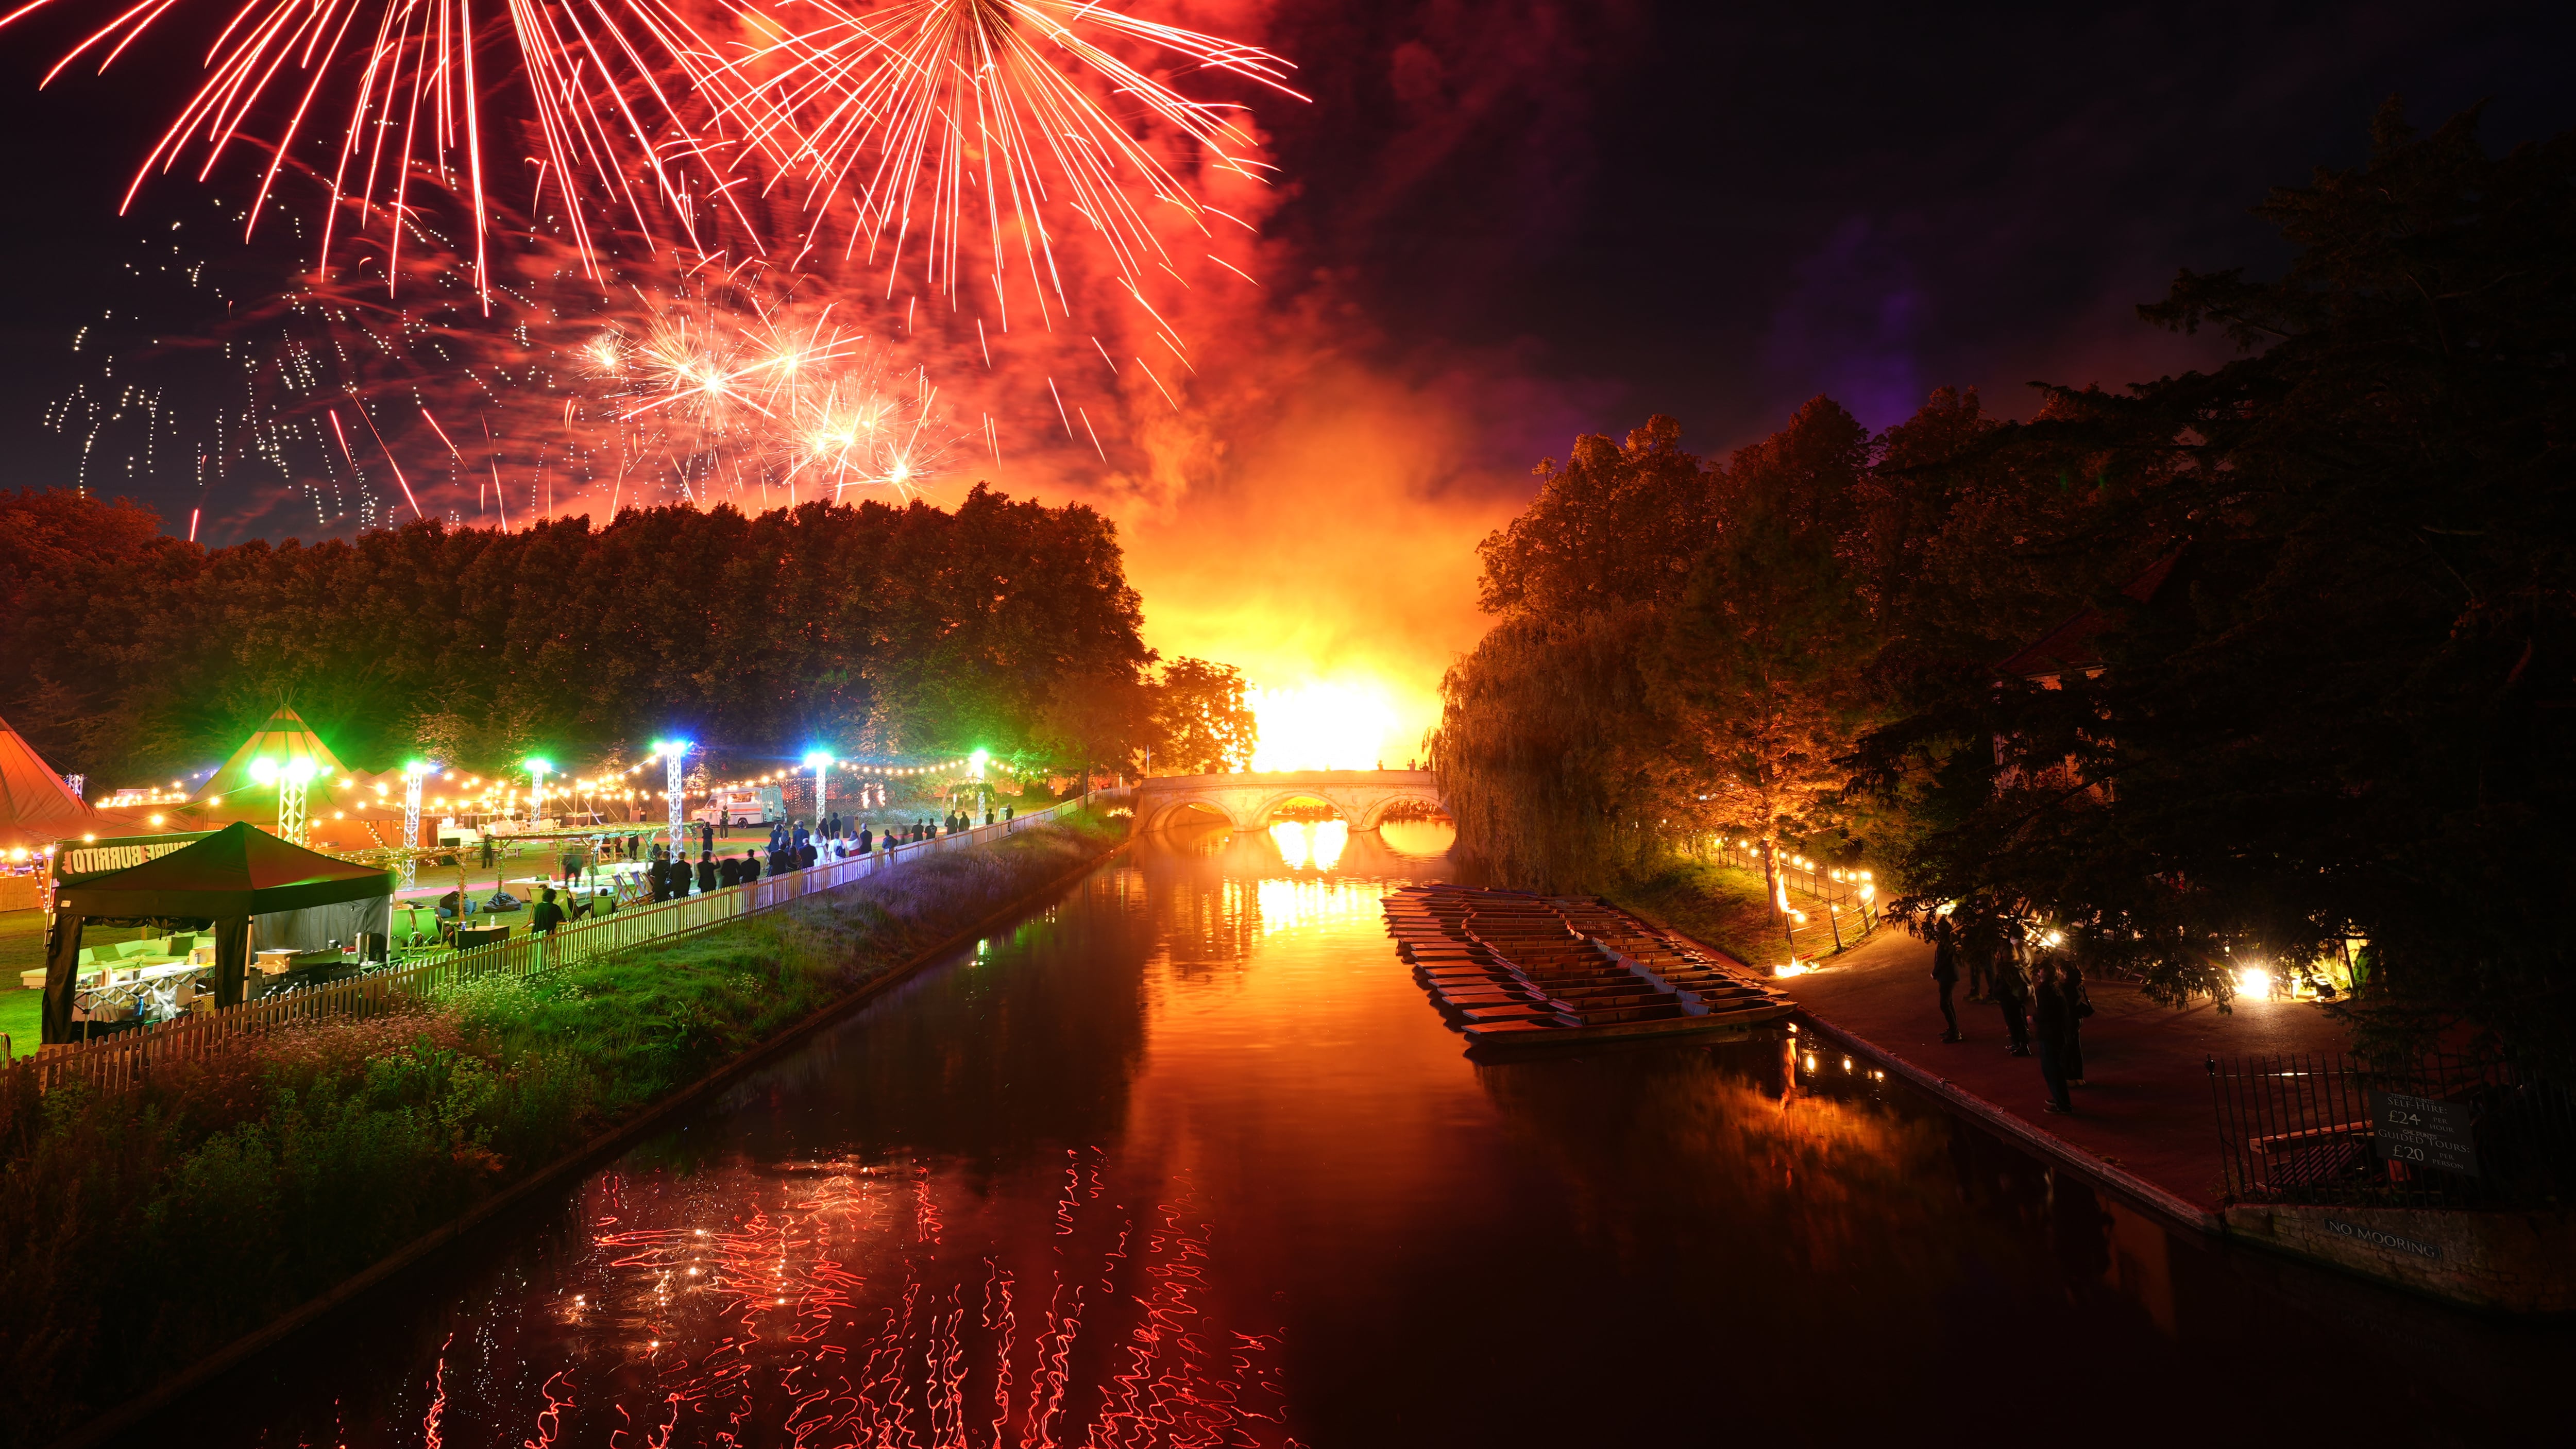 Fireworks explode over the River Cam